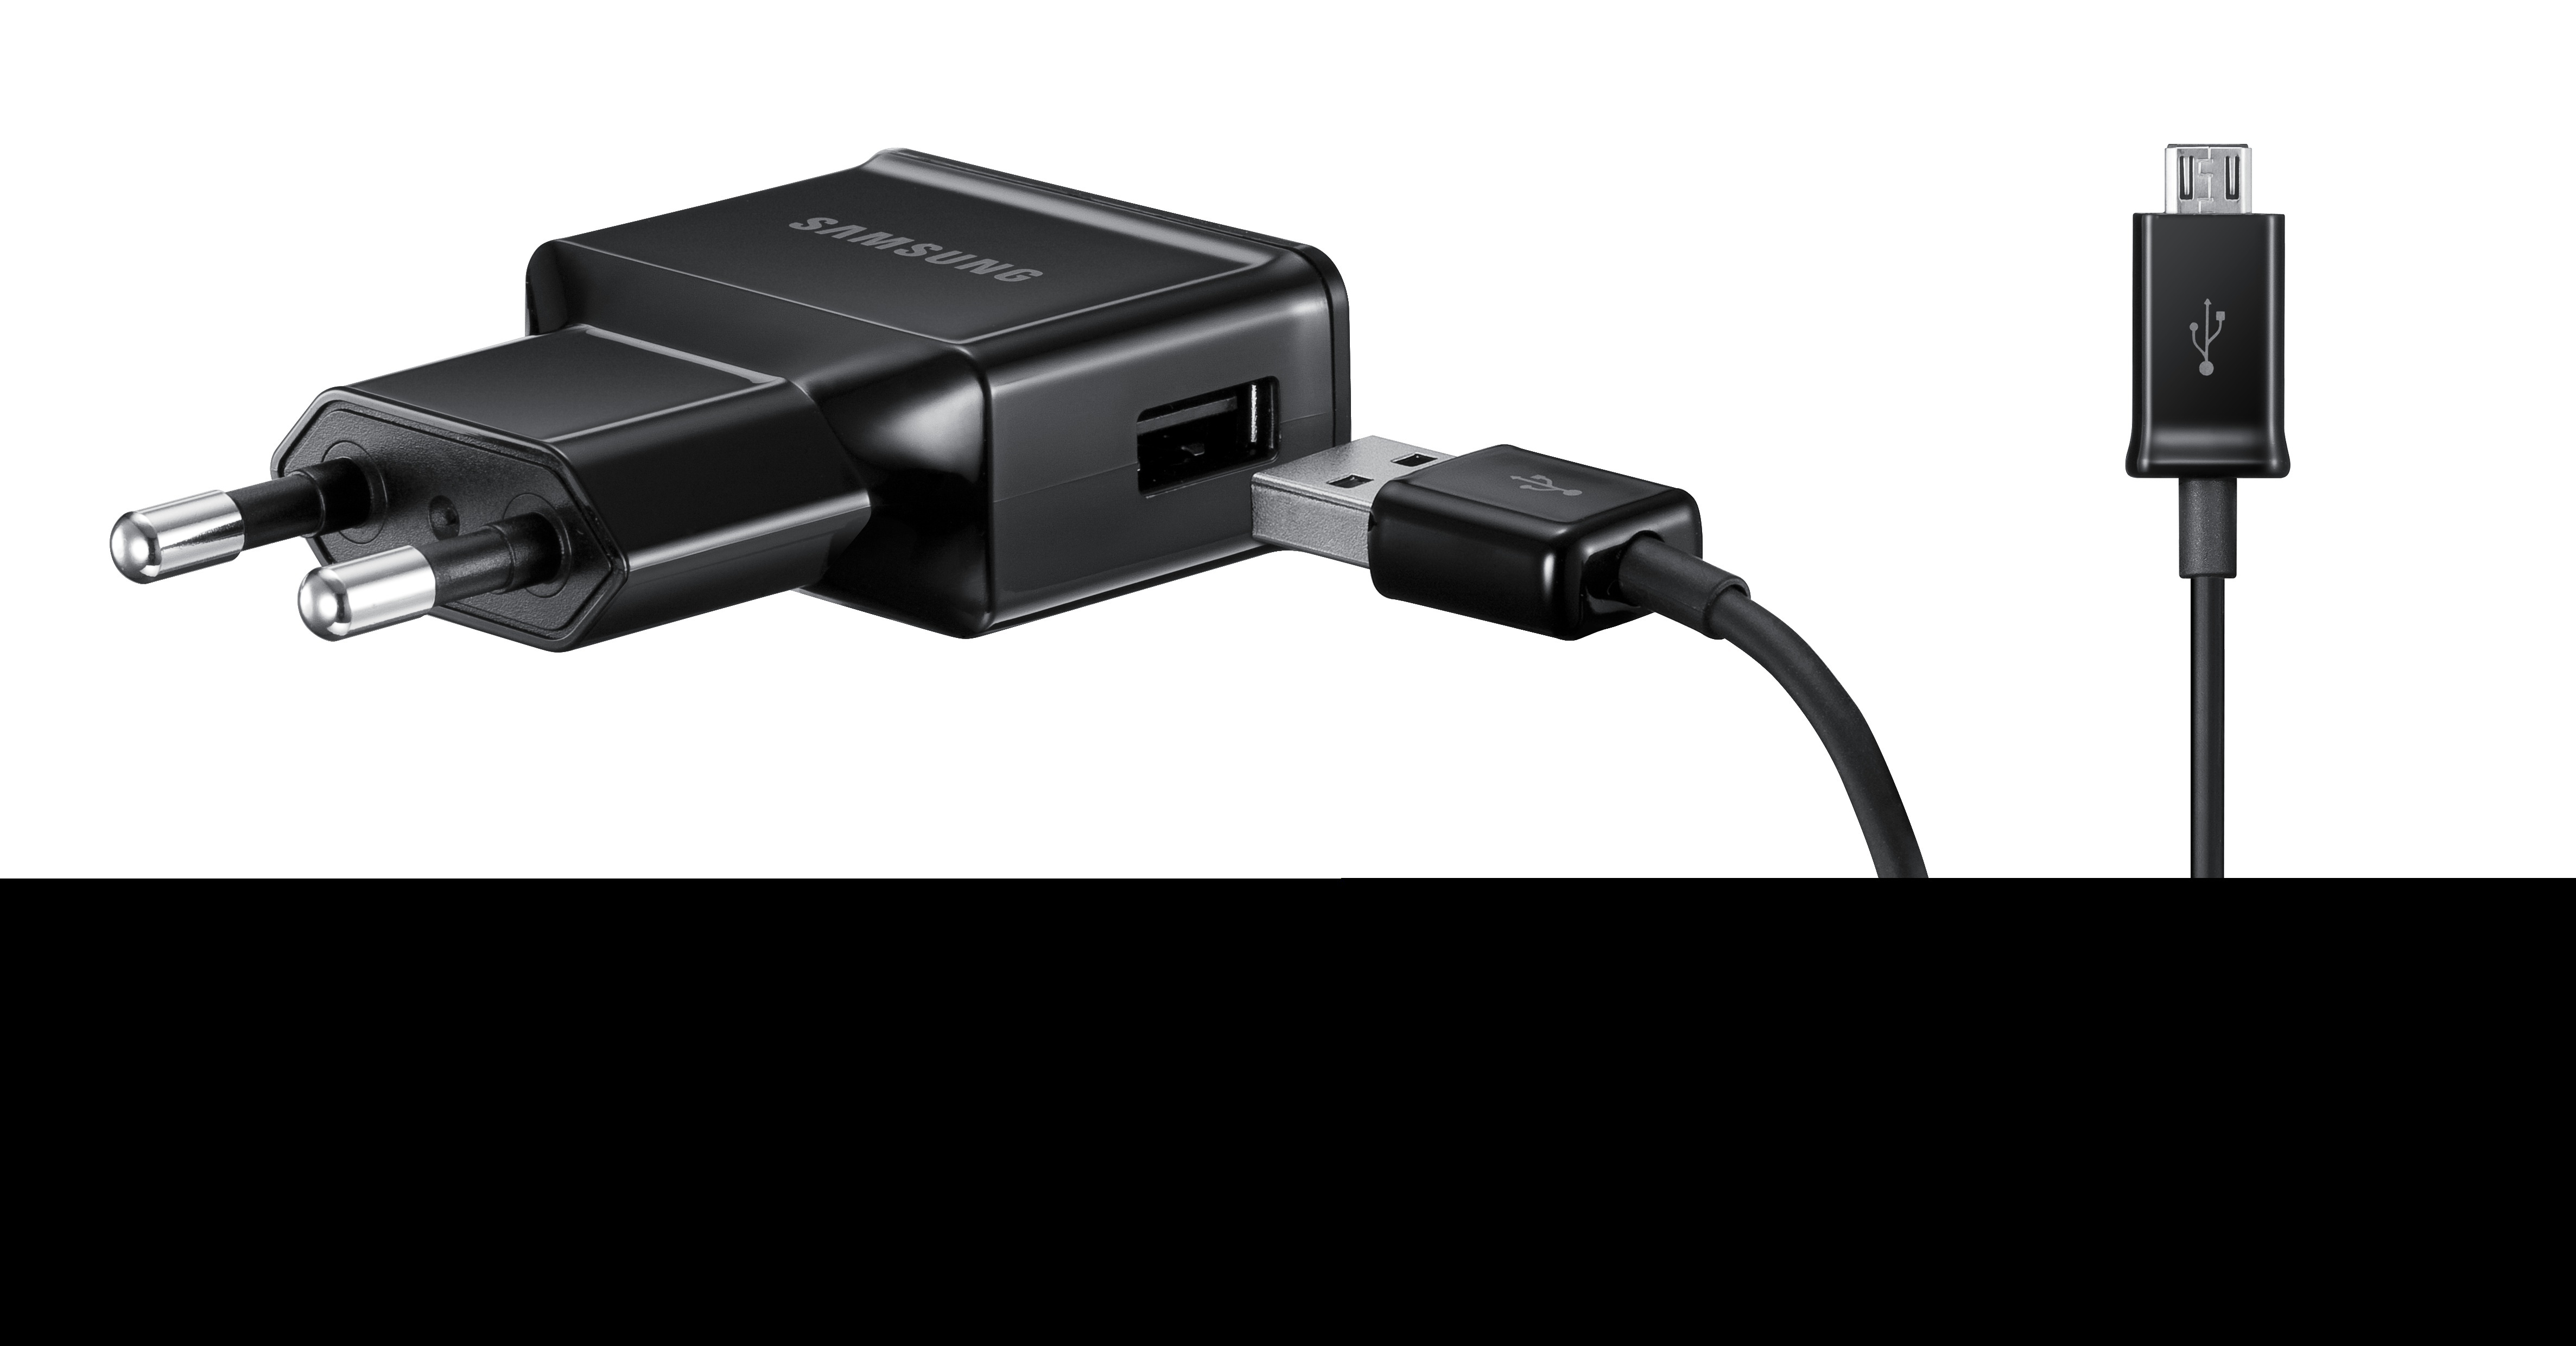 Chargeur Samsung Micro USB 1A